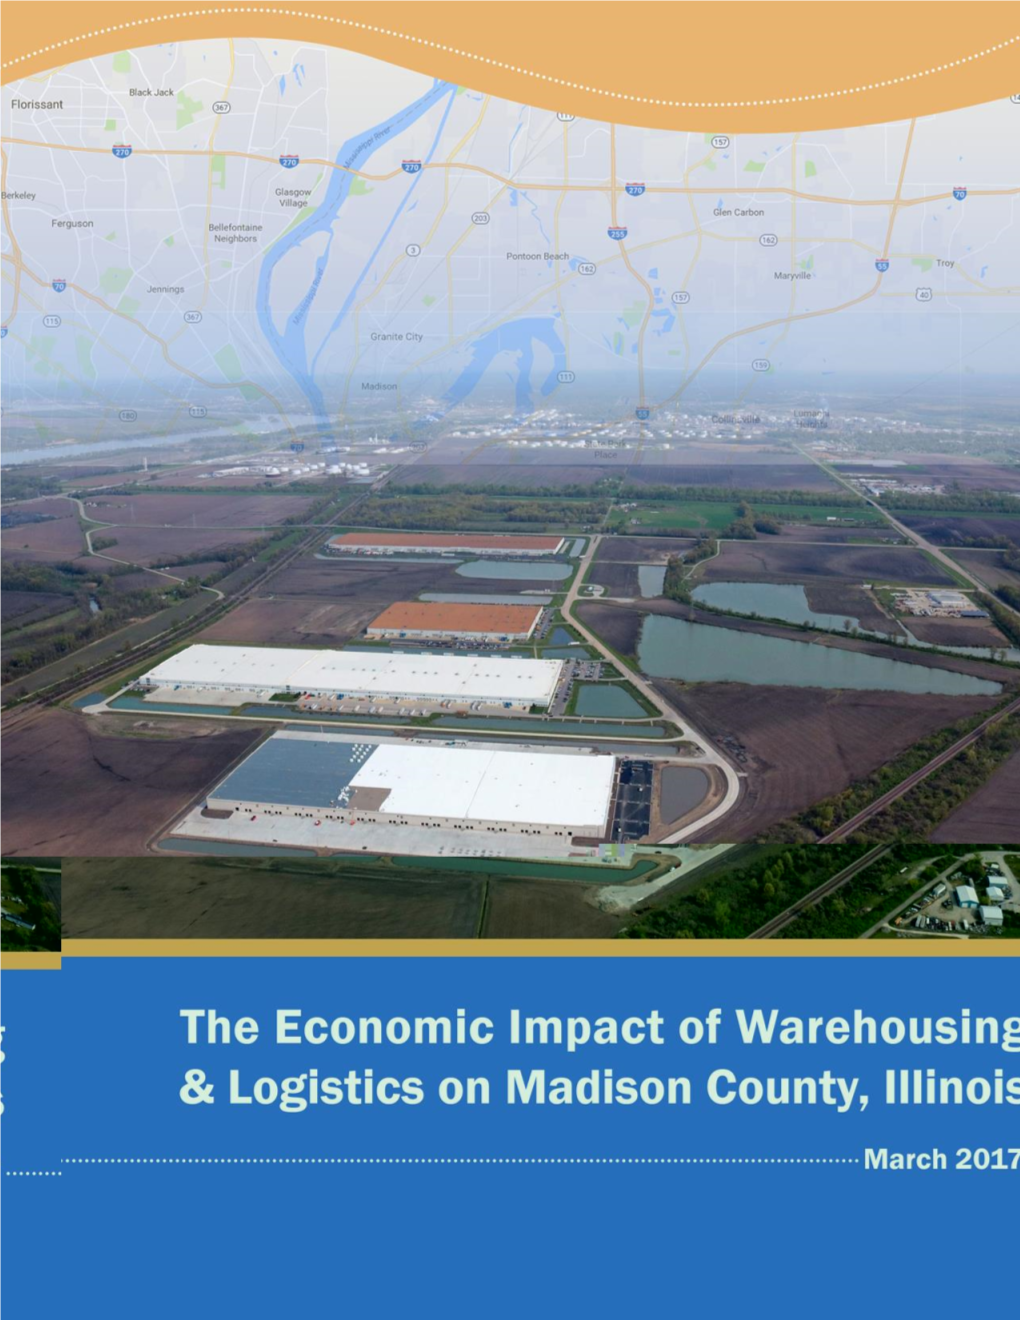 The Economic Impact of Warehousing and Logistics